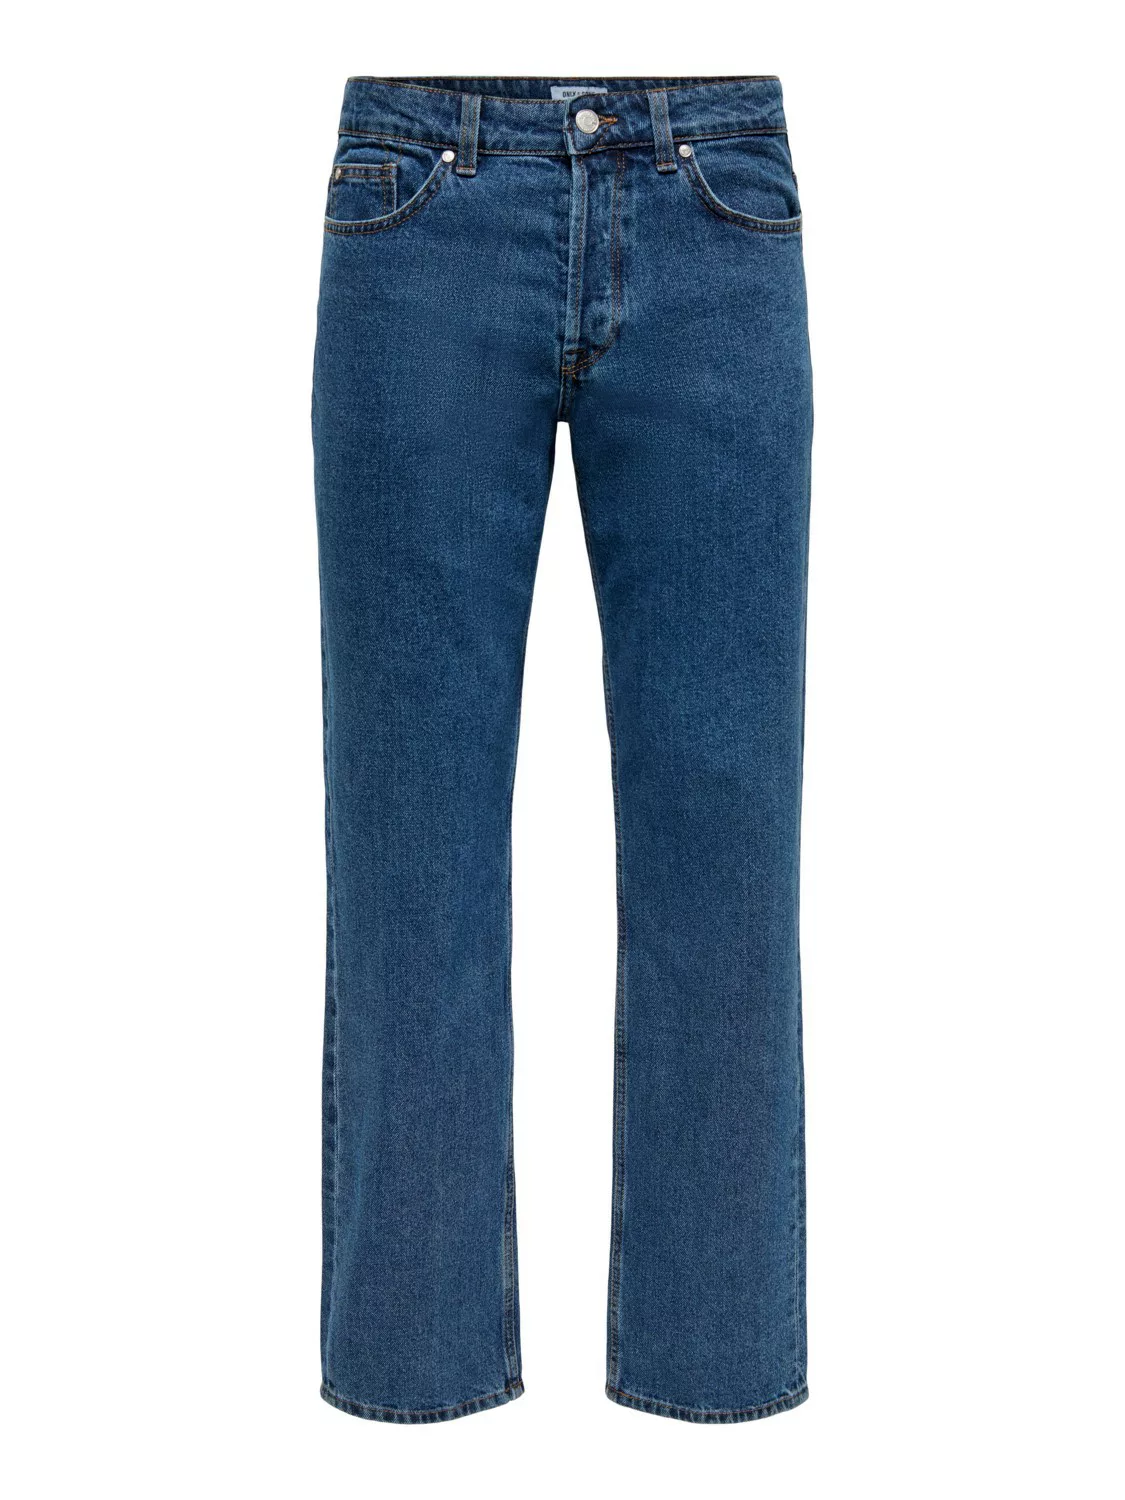 Only & Sons Herren Jeans ONSEDGE D. BLUE 3813 - Relaxed Fit - Blau - Blue D günstig online kaufen